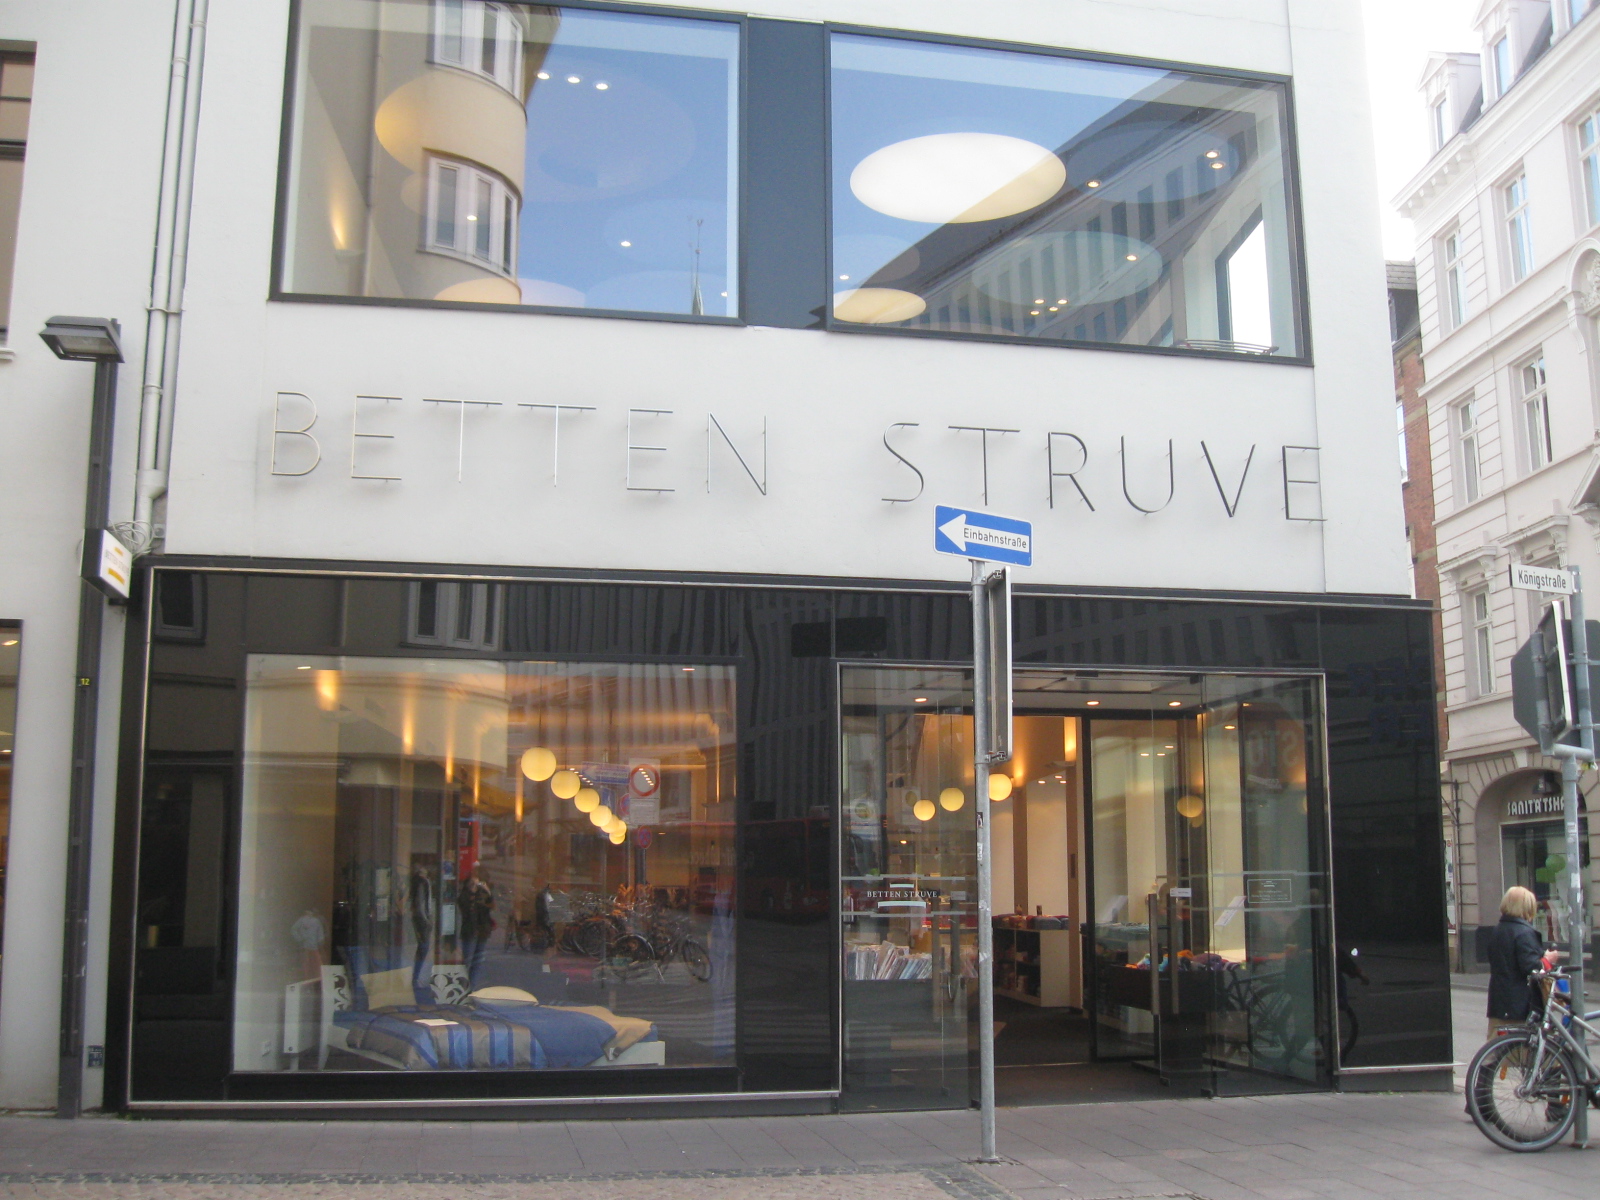 Bild 3 Betten Struve GmbH & Co. KG in Lübeck